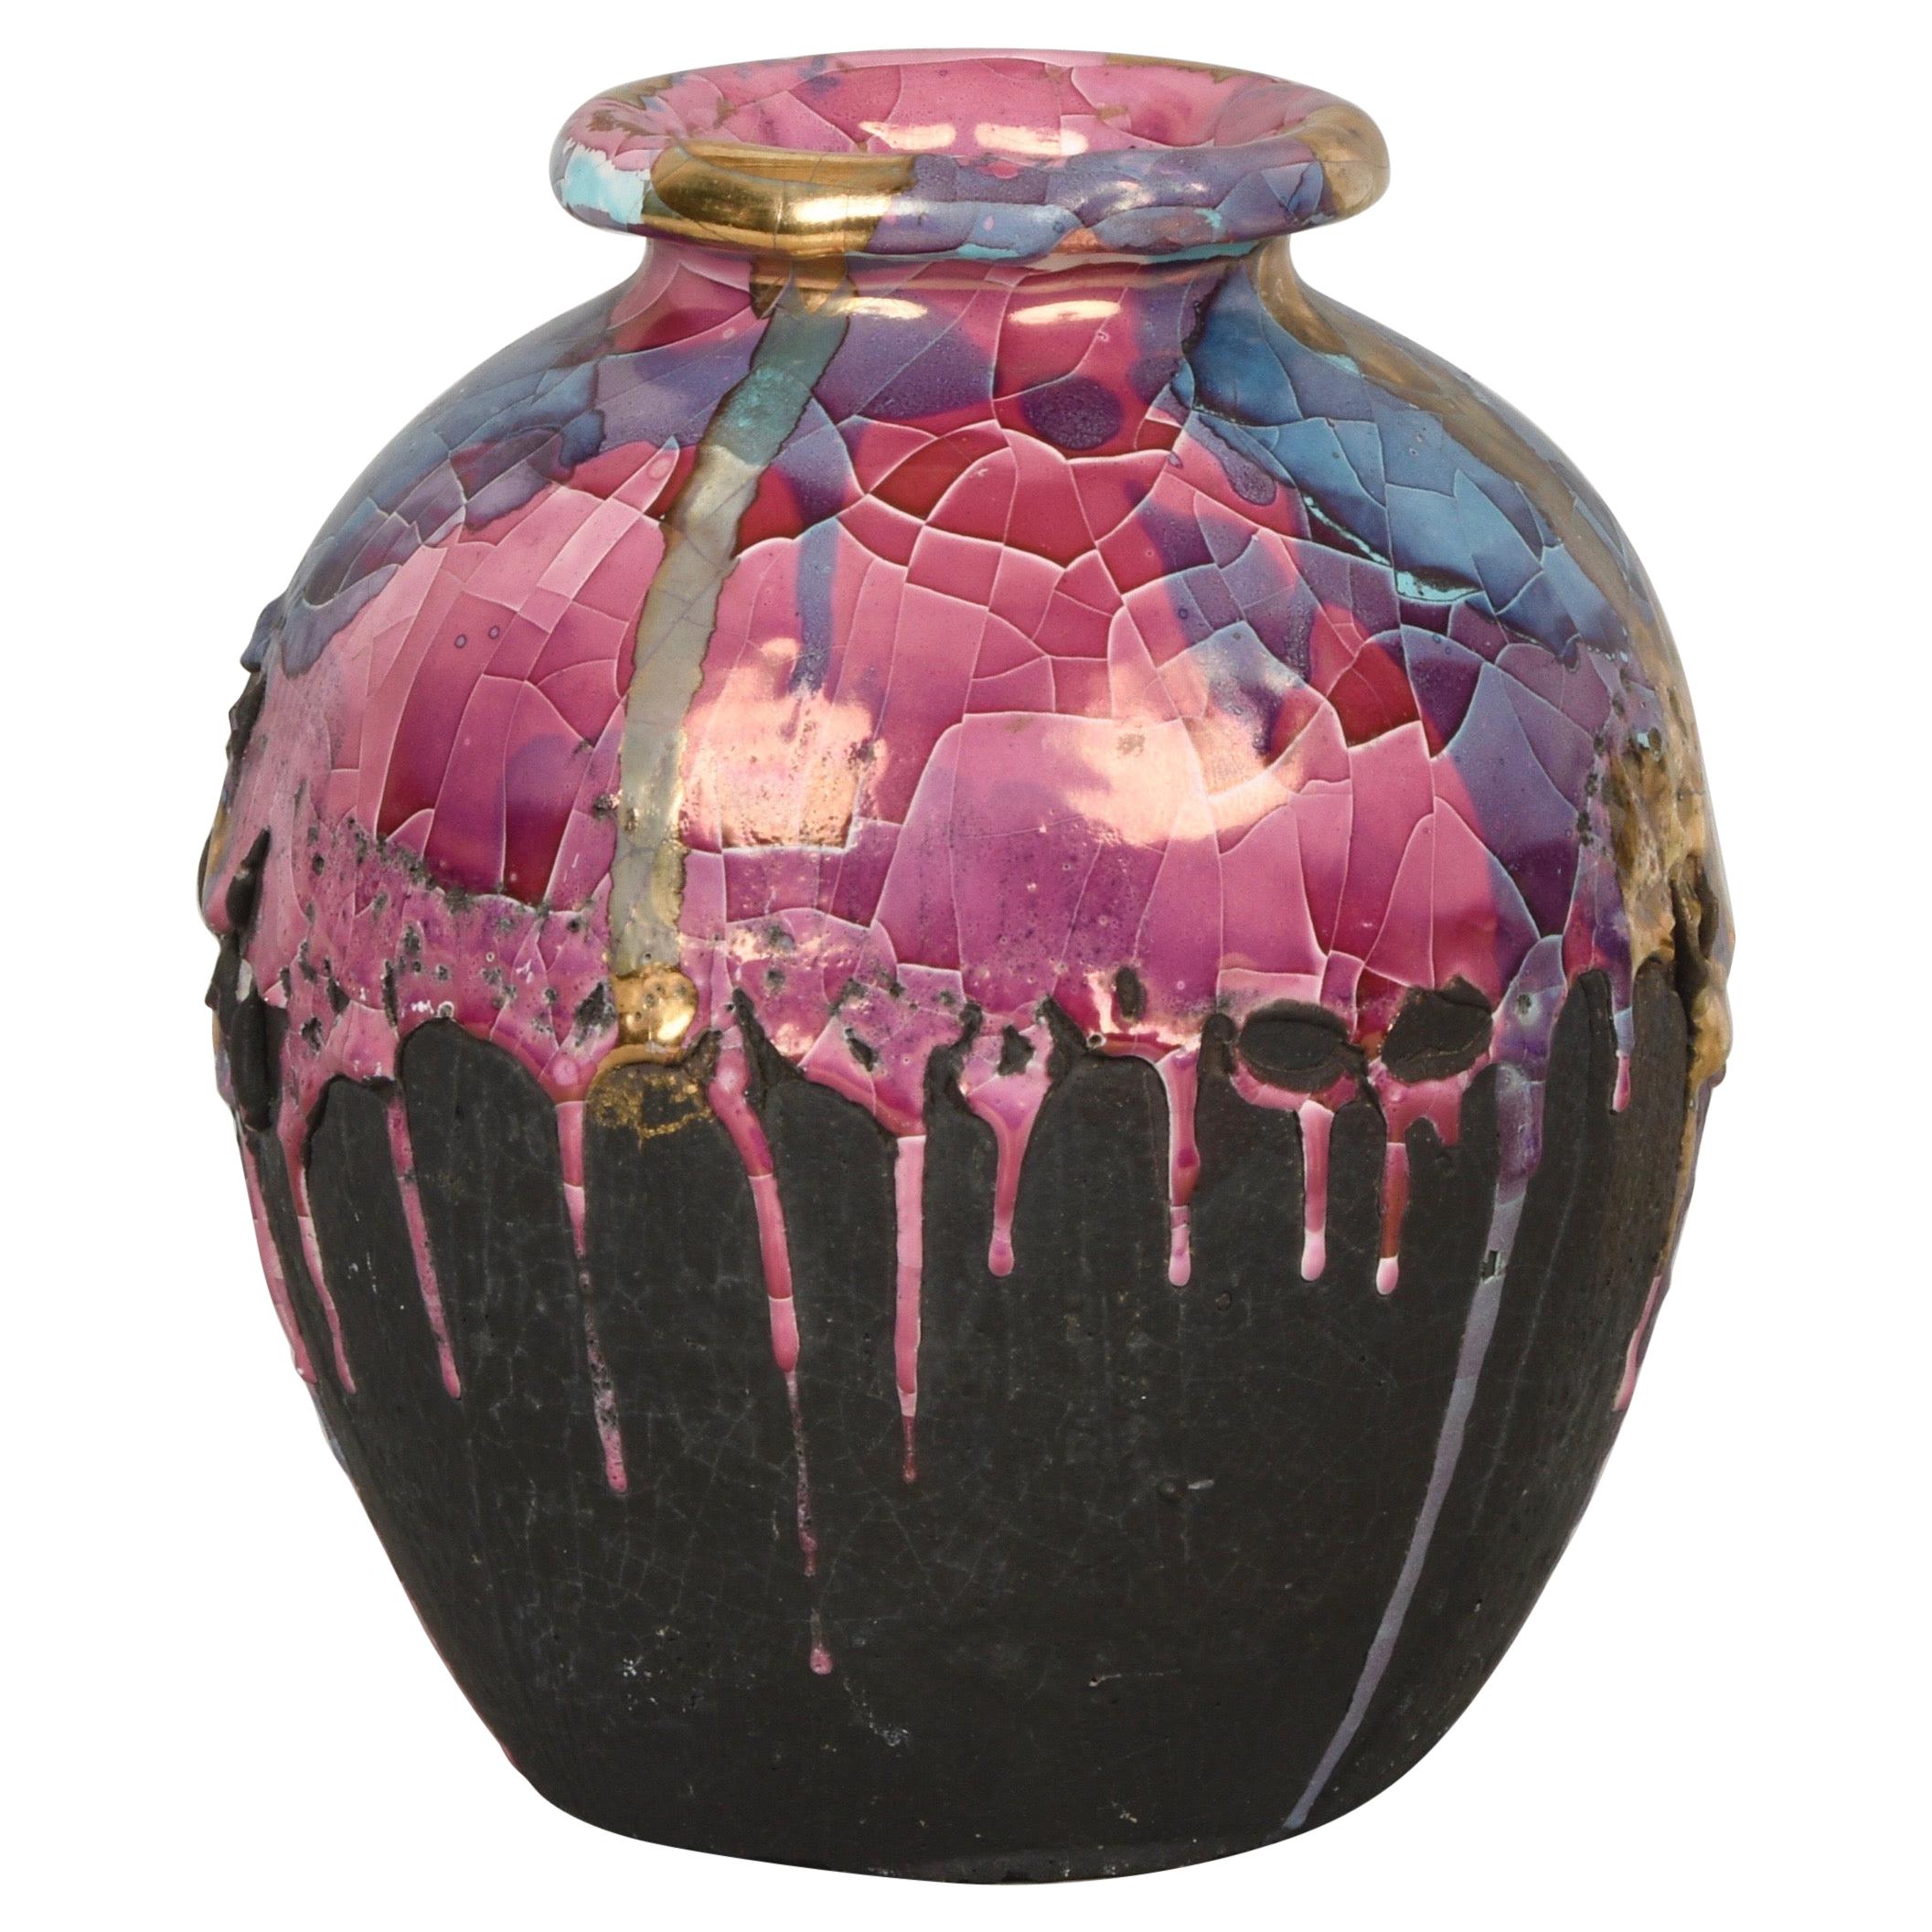 Midcentury Claudio Pulli Polychromed Enameled Ceramic Italian Vase, 1970s